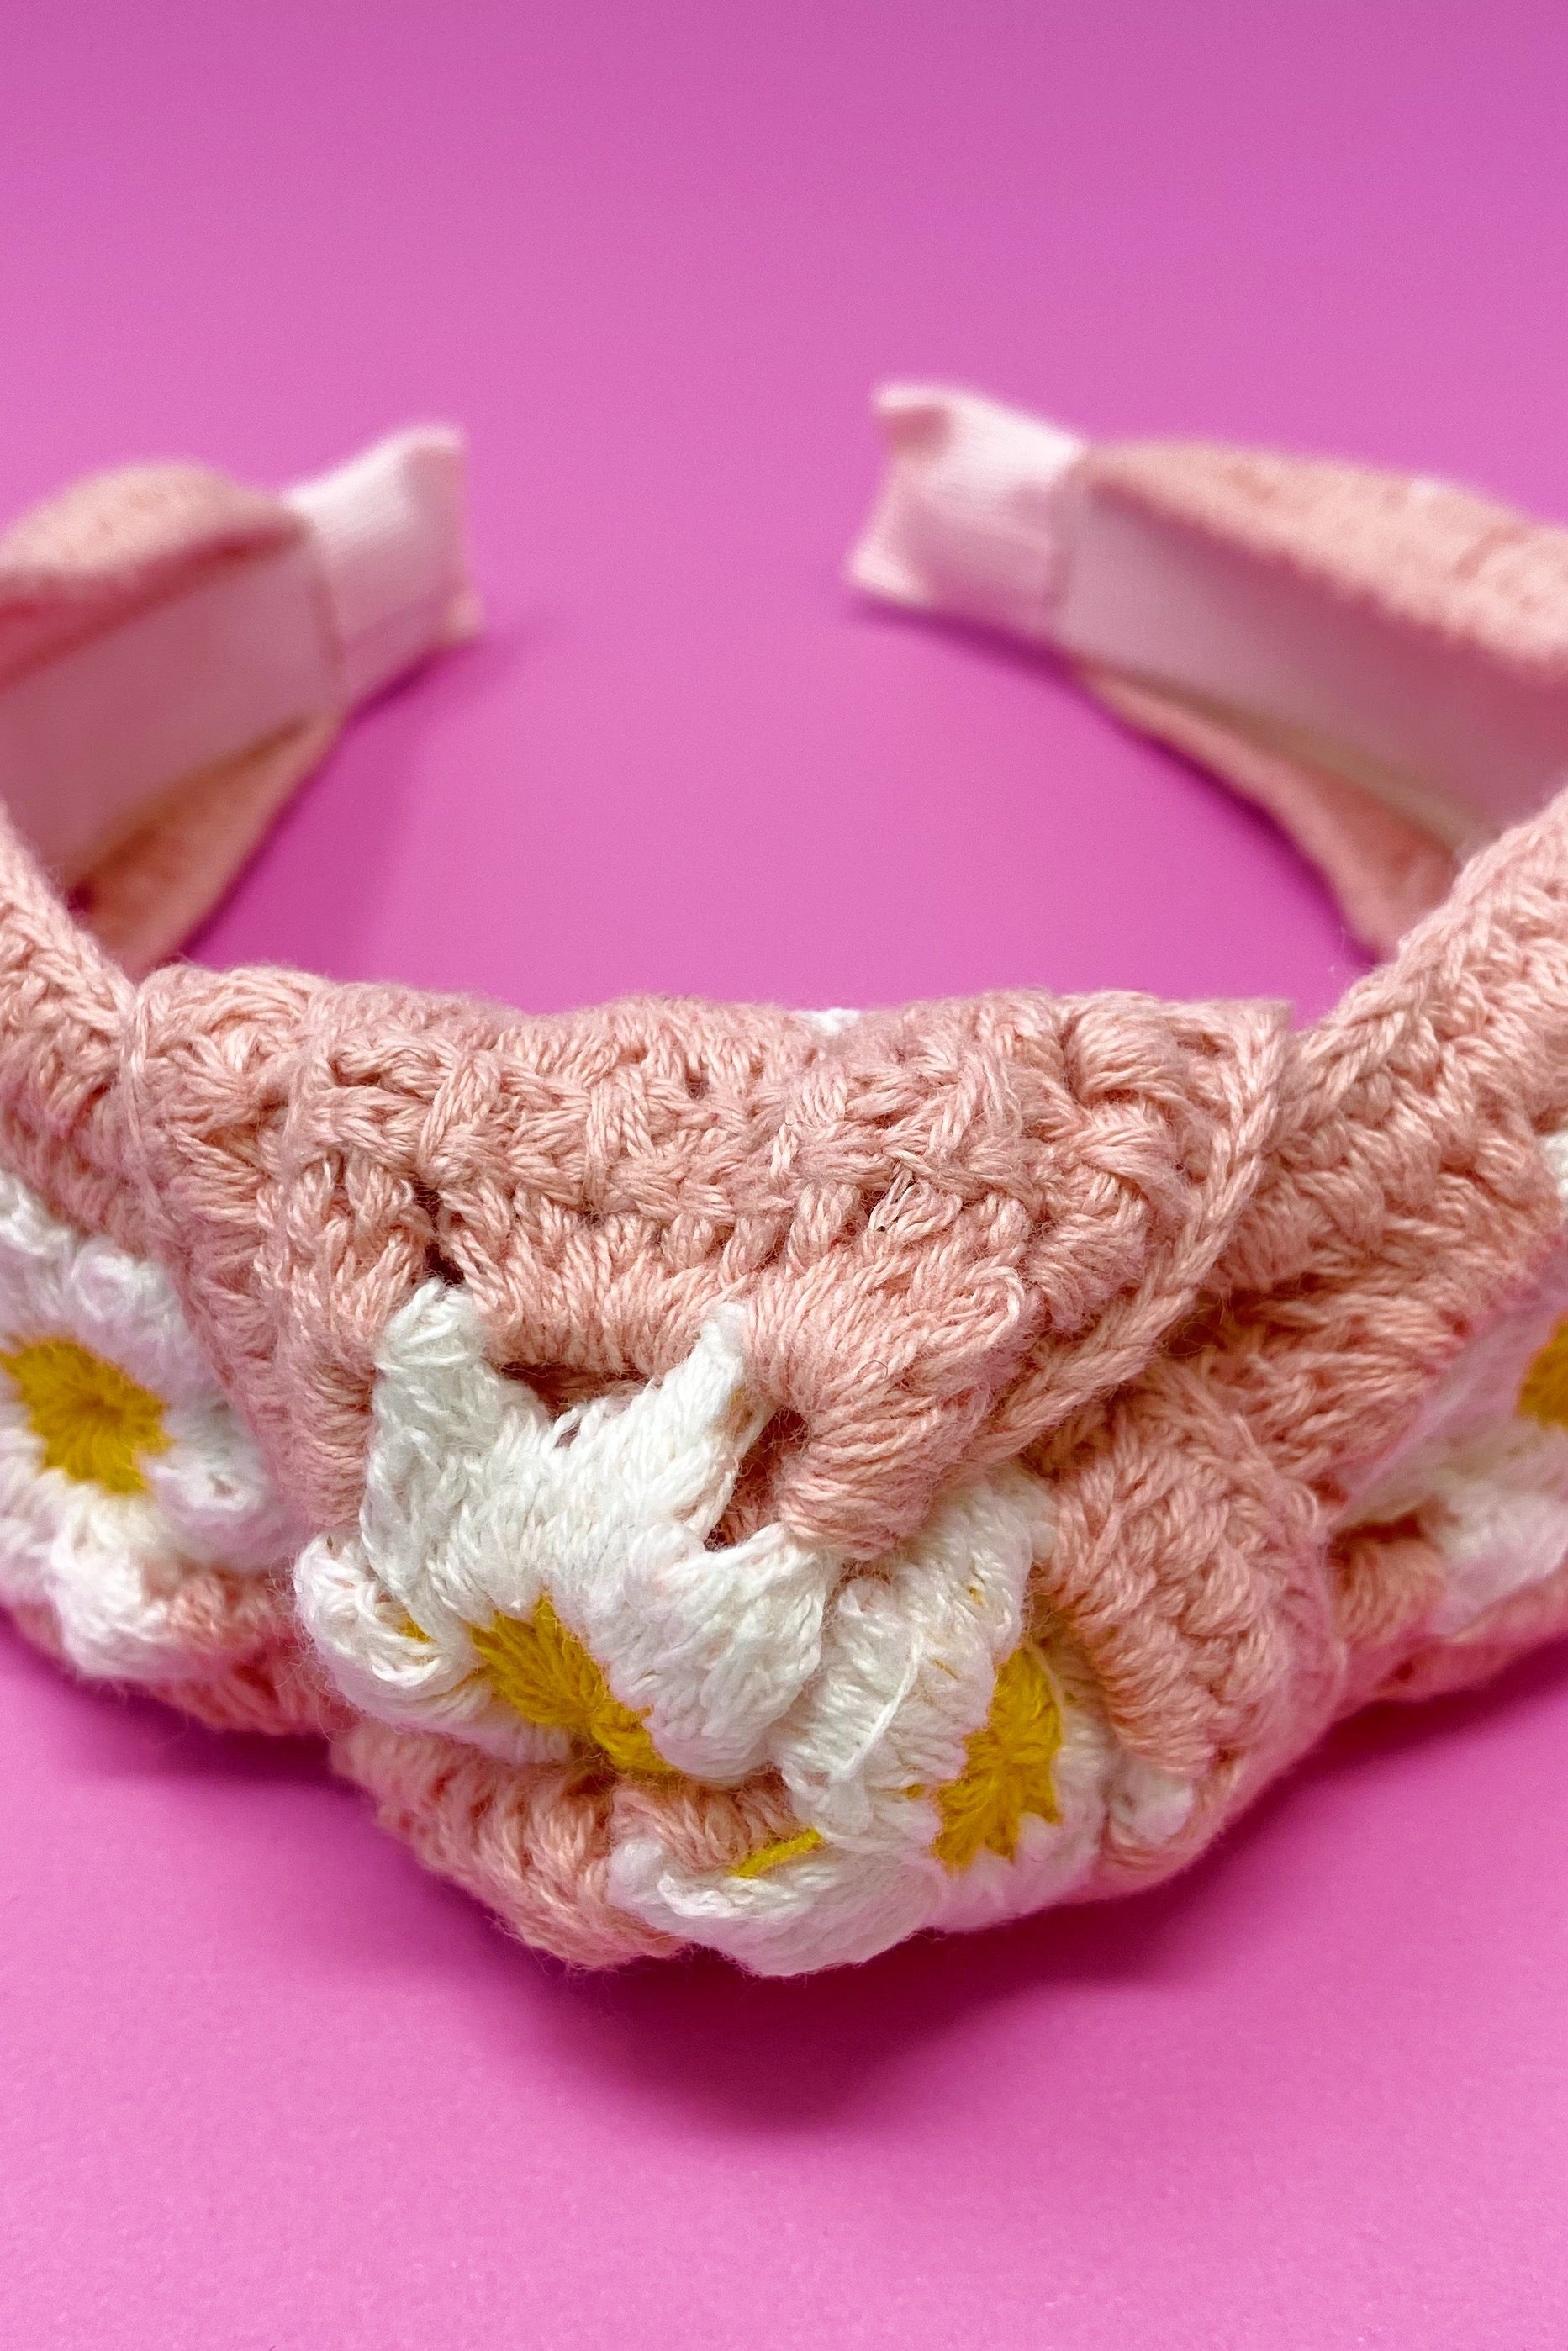 Patchwork Crochet Headband Ellisonyoung.com